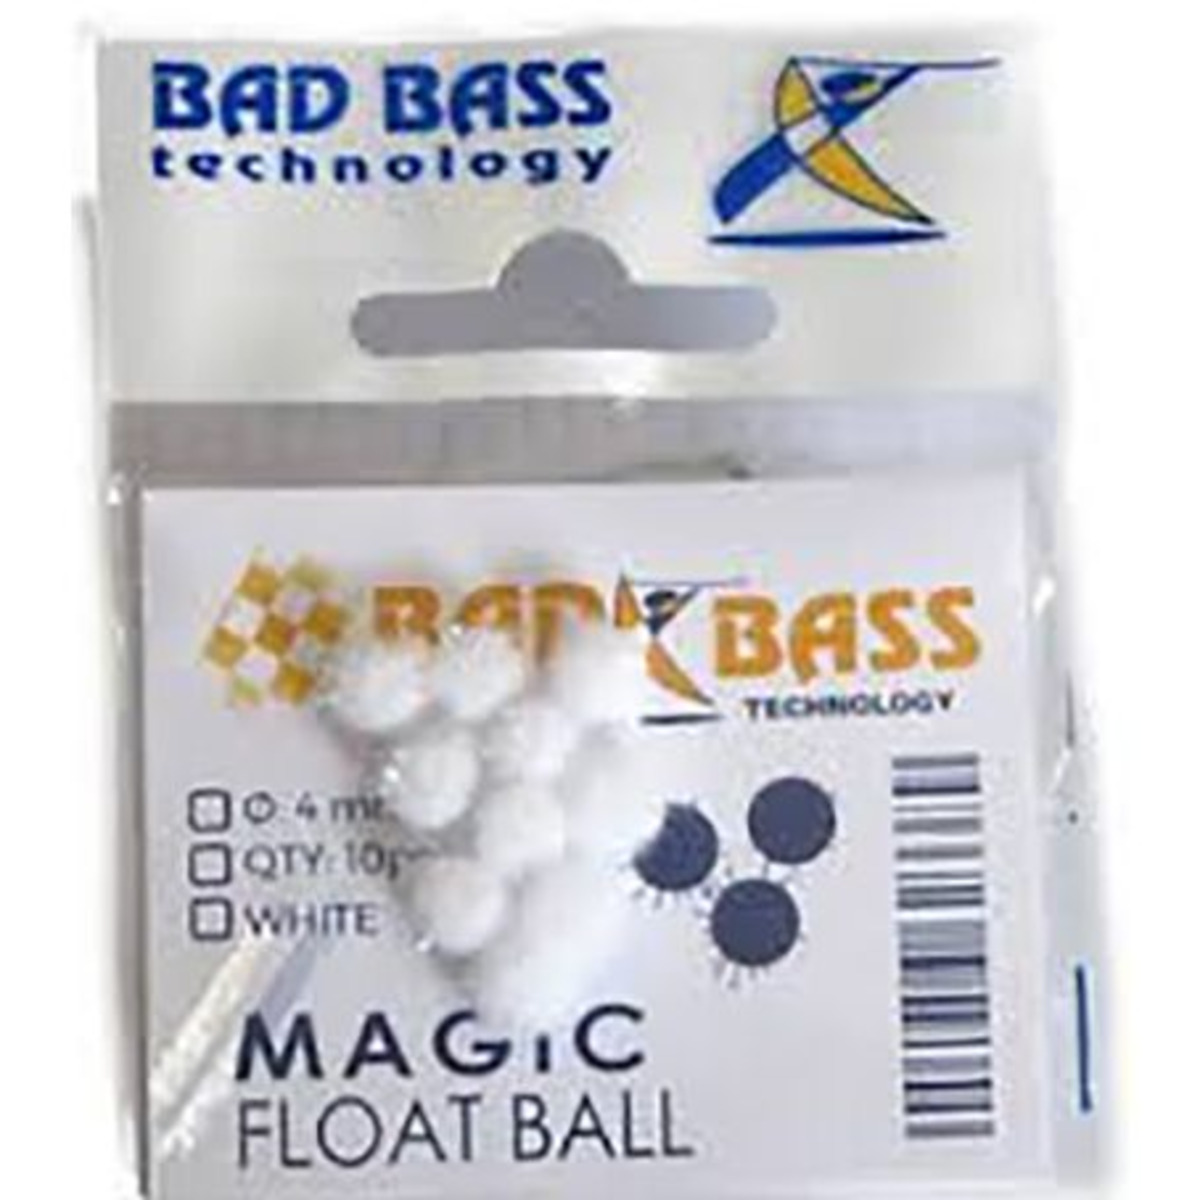 Bad Bass Magic Float Ball - 4 mm - White